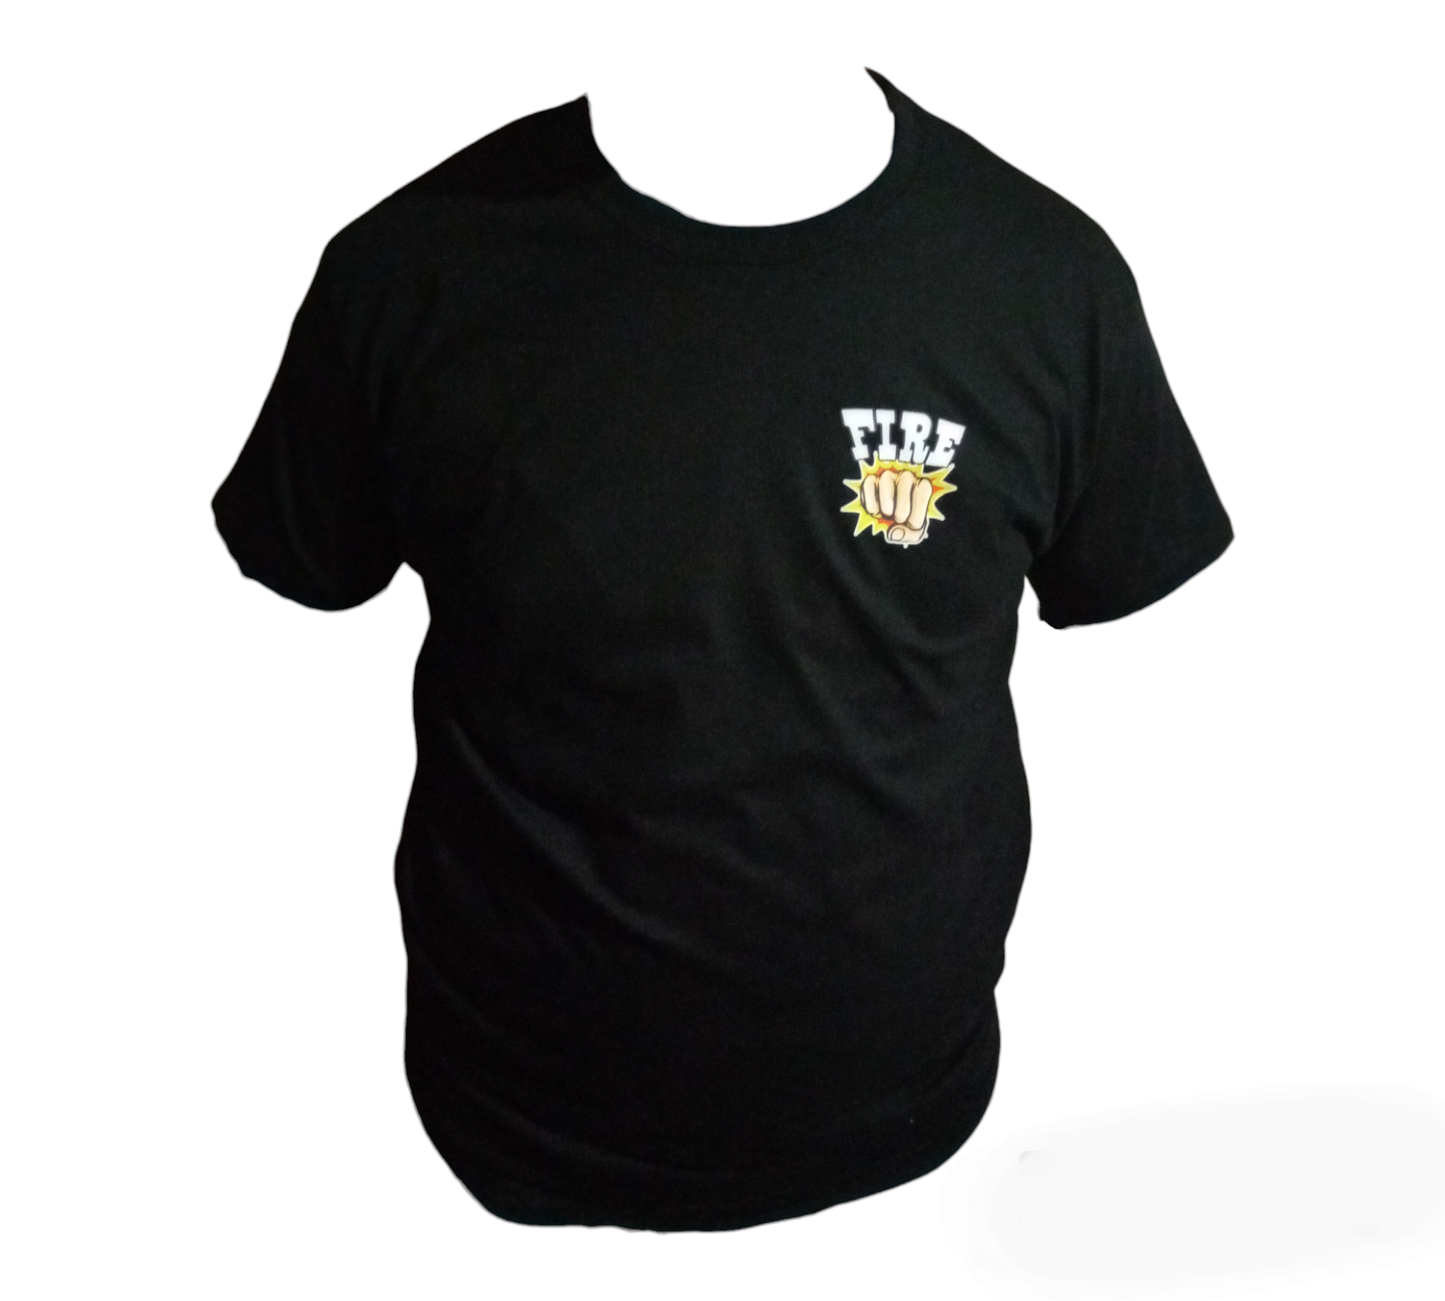 Tee-shirt manches courtes "Fire noir"